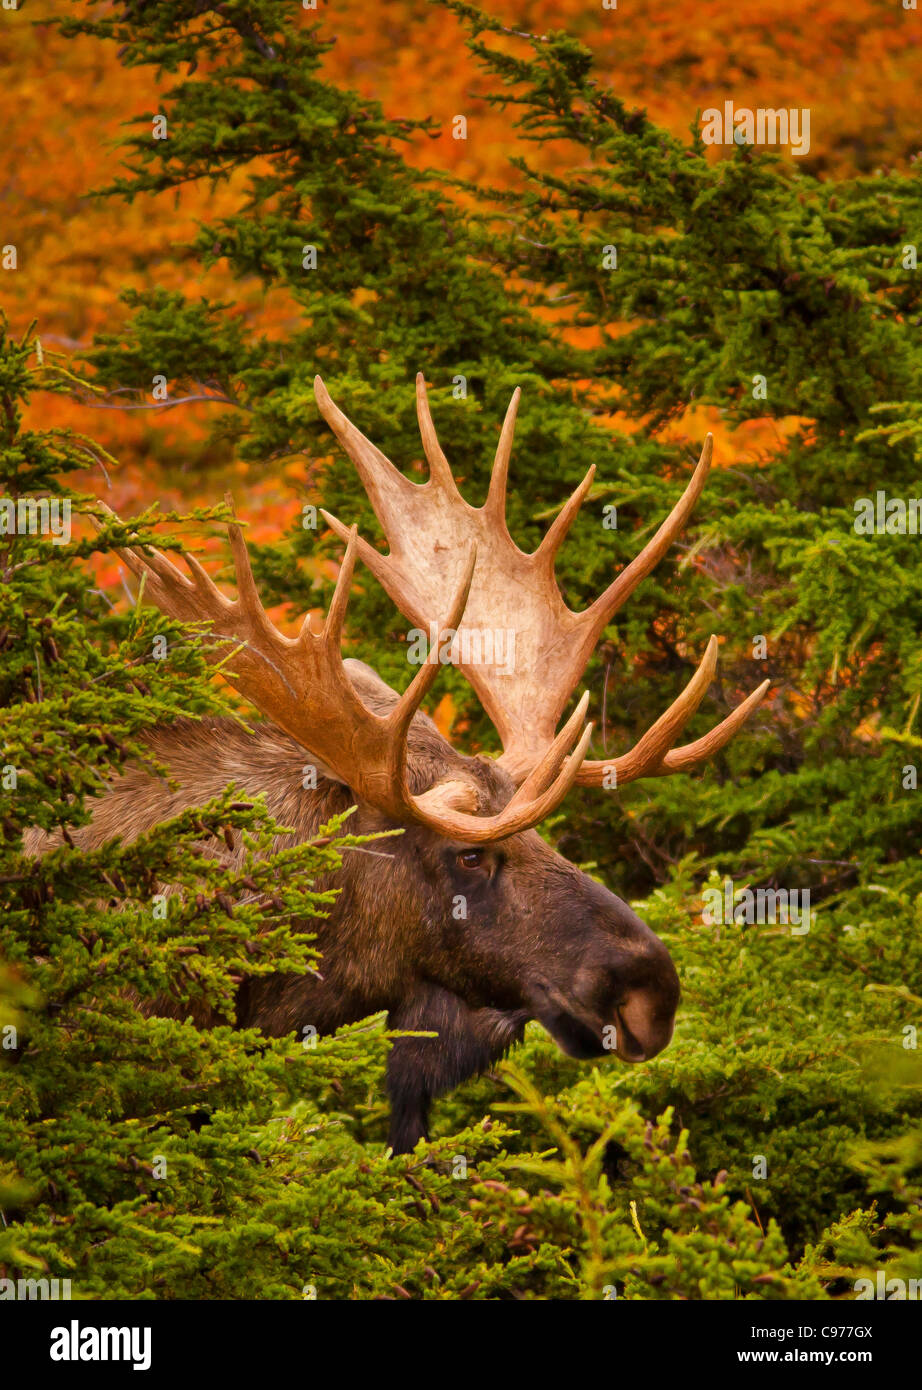 CHUGACH STATE PARK, ALASKA, USA - Bull moose, Alces alces, and autumn foliage. Stock Photo